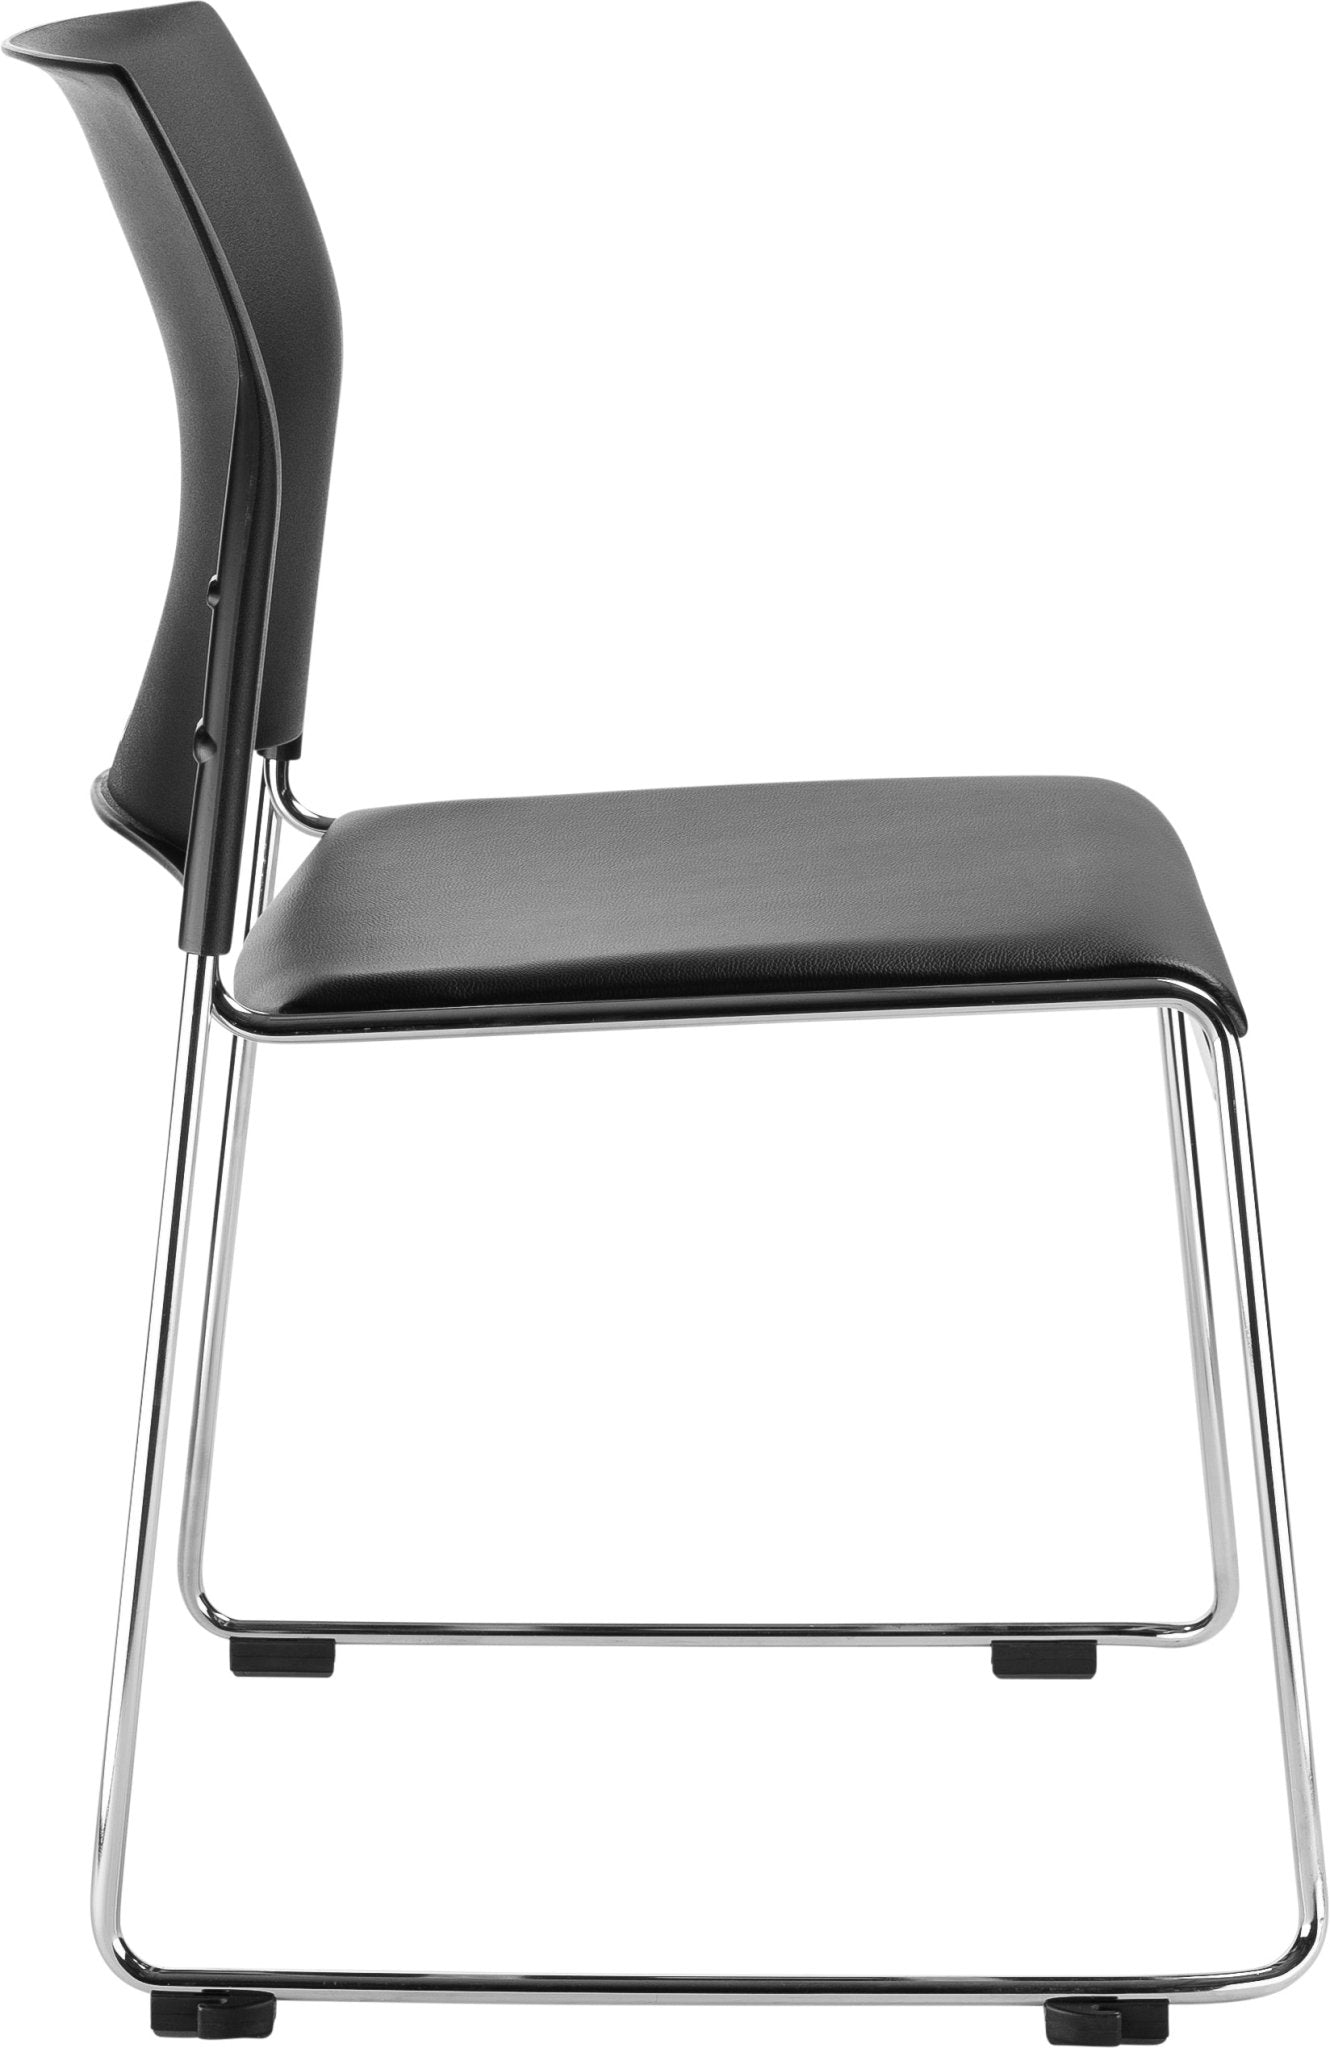 NPS 8700 Series Plush Vinyl Cafetorium Stack Chair (National Public Seating NPS-8700) - SchoolOutlet